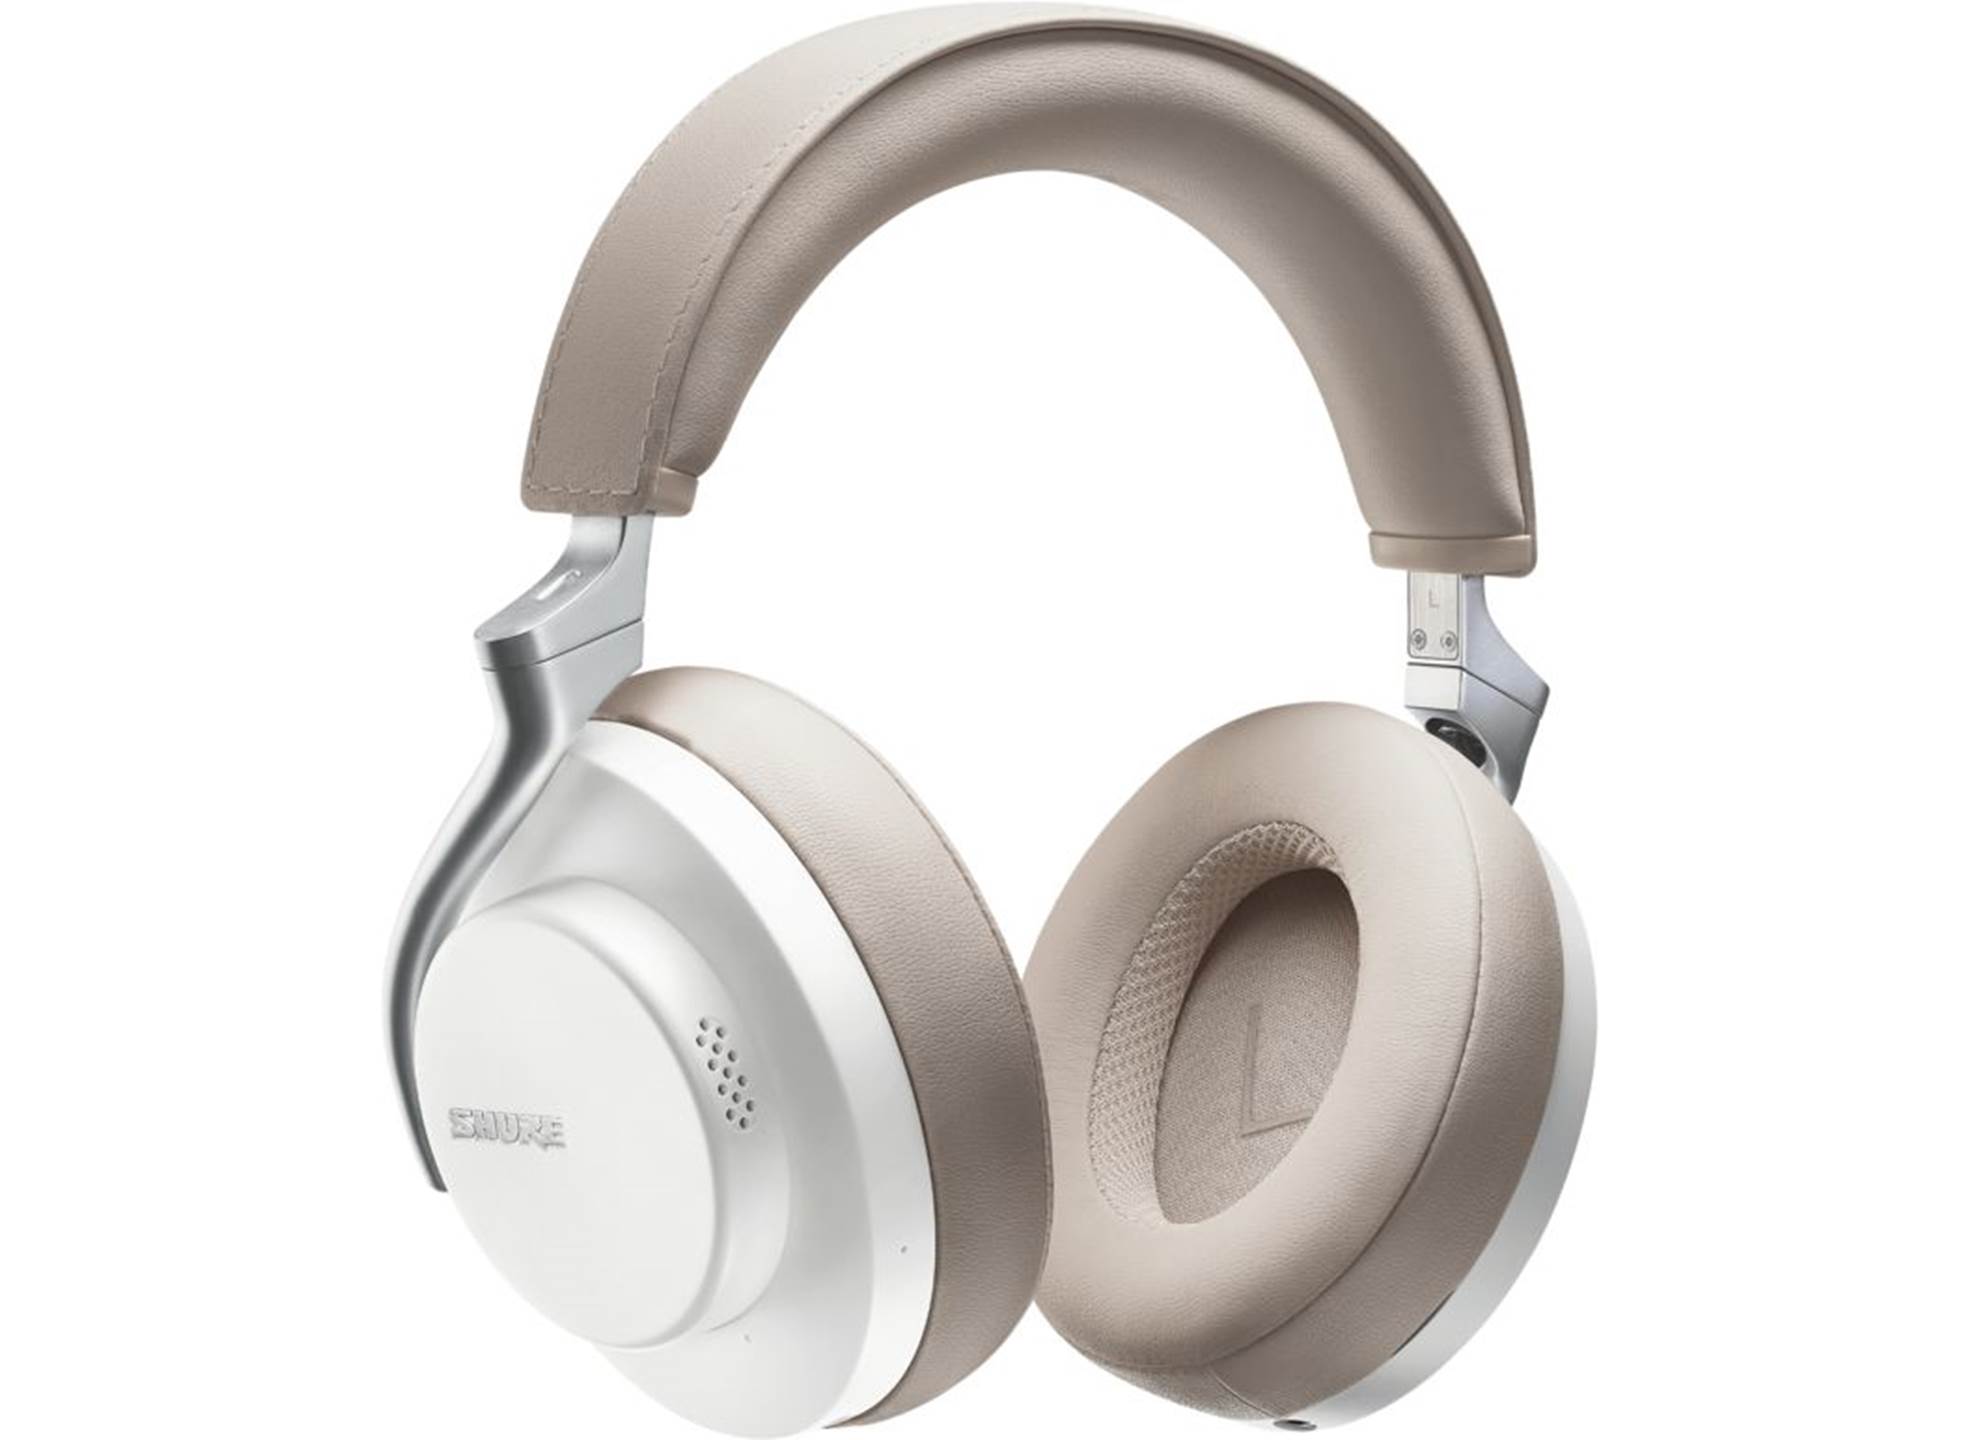 BH2350-WH Aonic 50 premium wireless headphones White